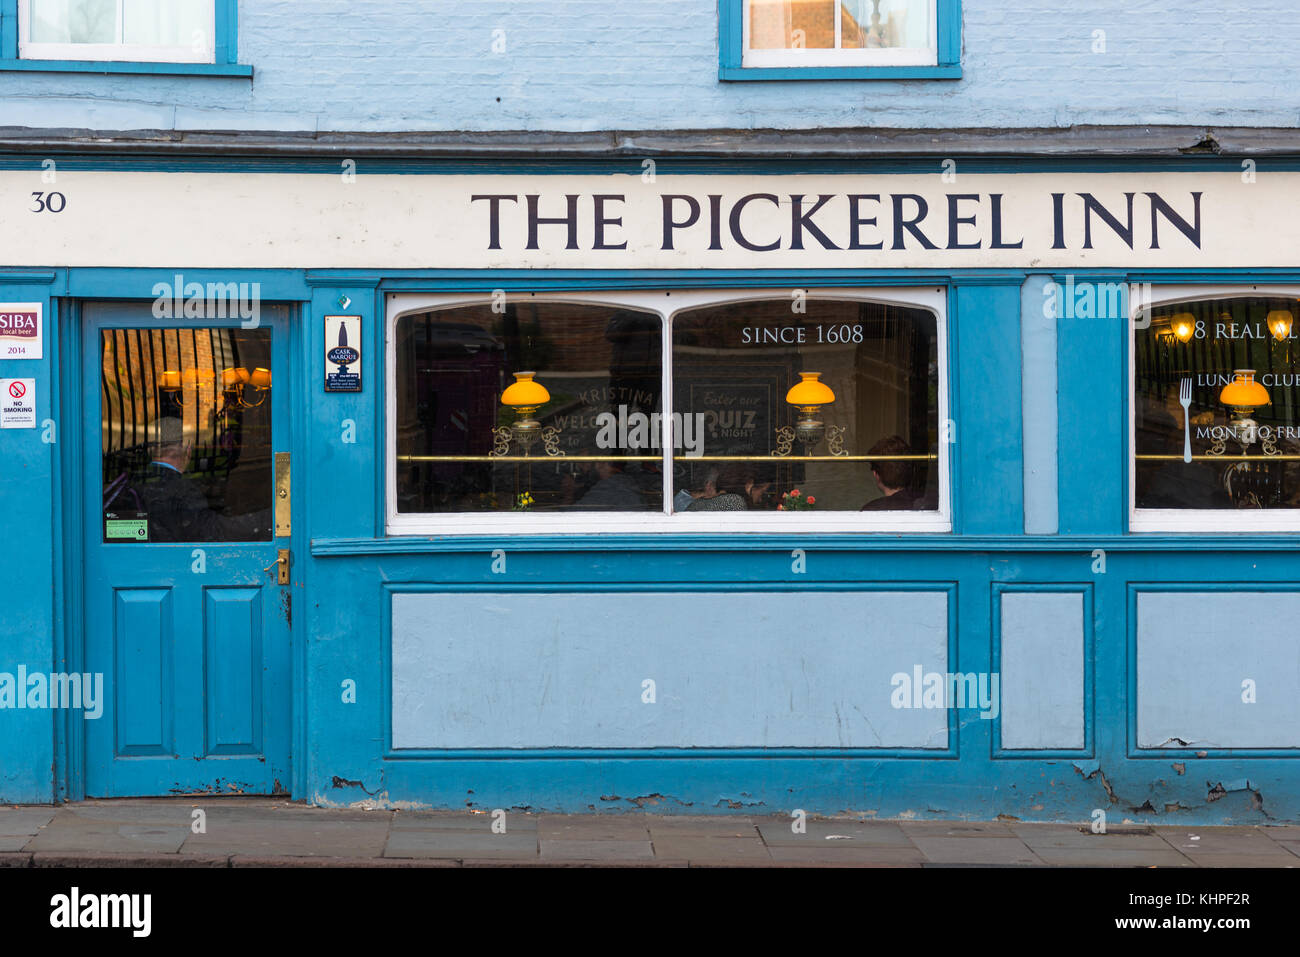 Alte Pub The Pickerel Inn, 1608 gegründet auf Bridge St Stadt Cambridge, England, UK. Stockfoto